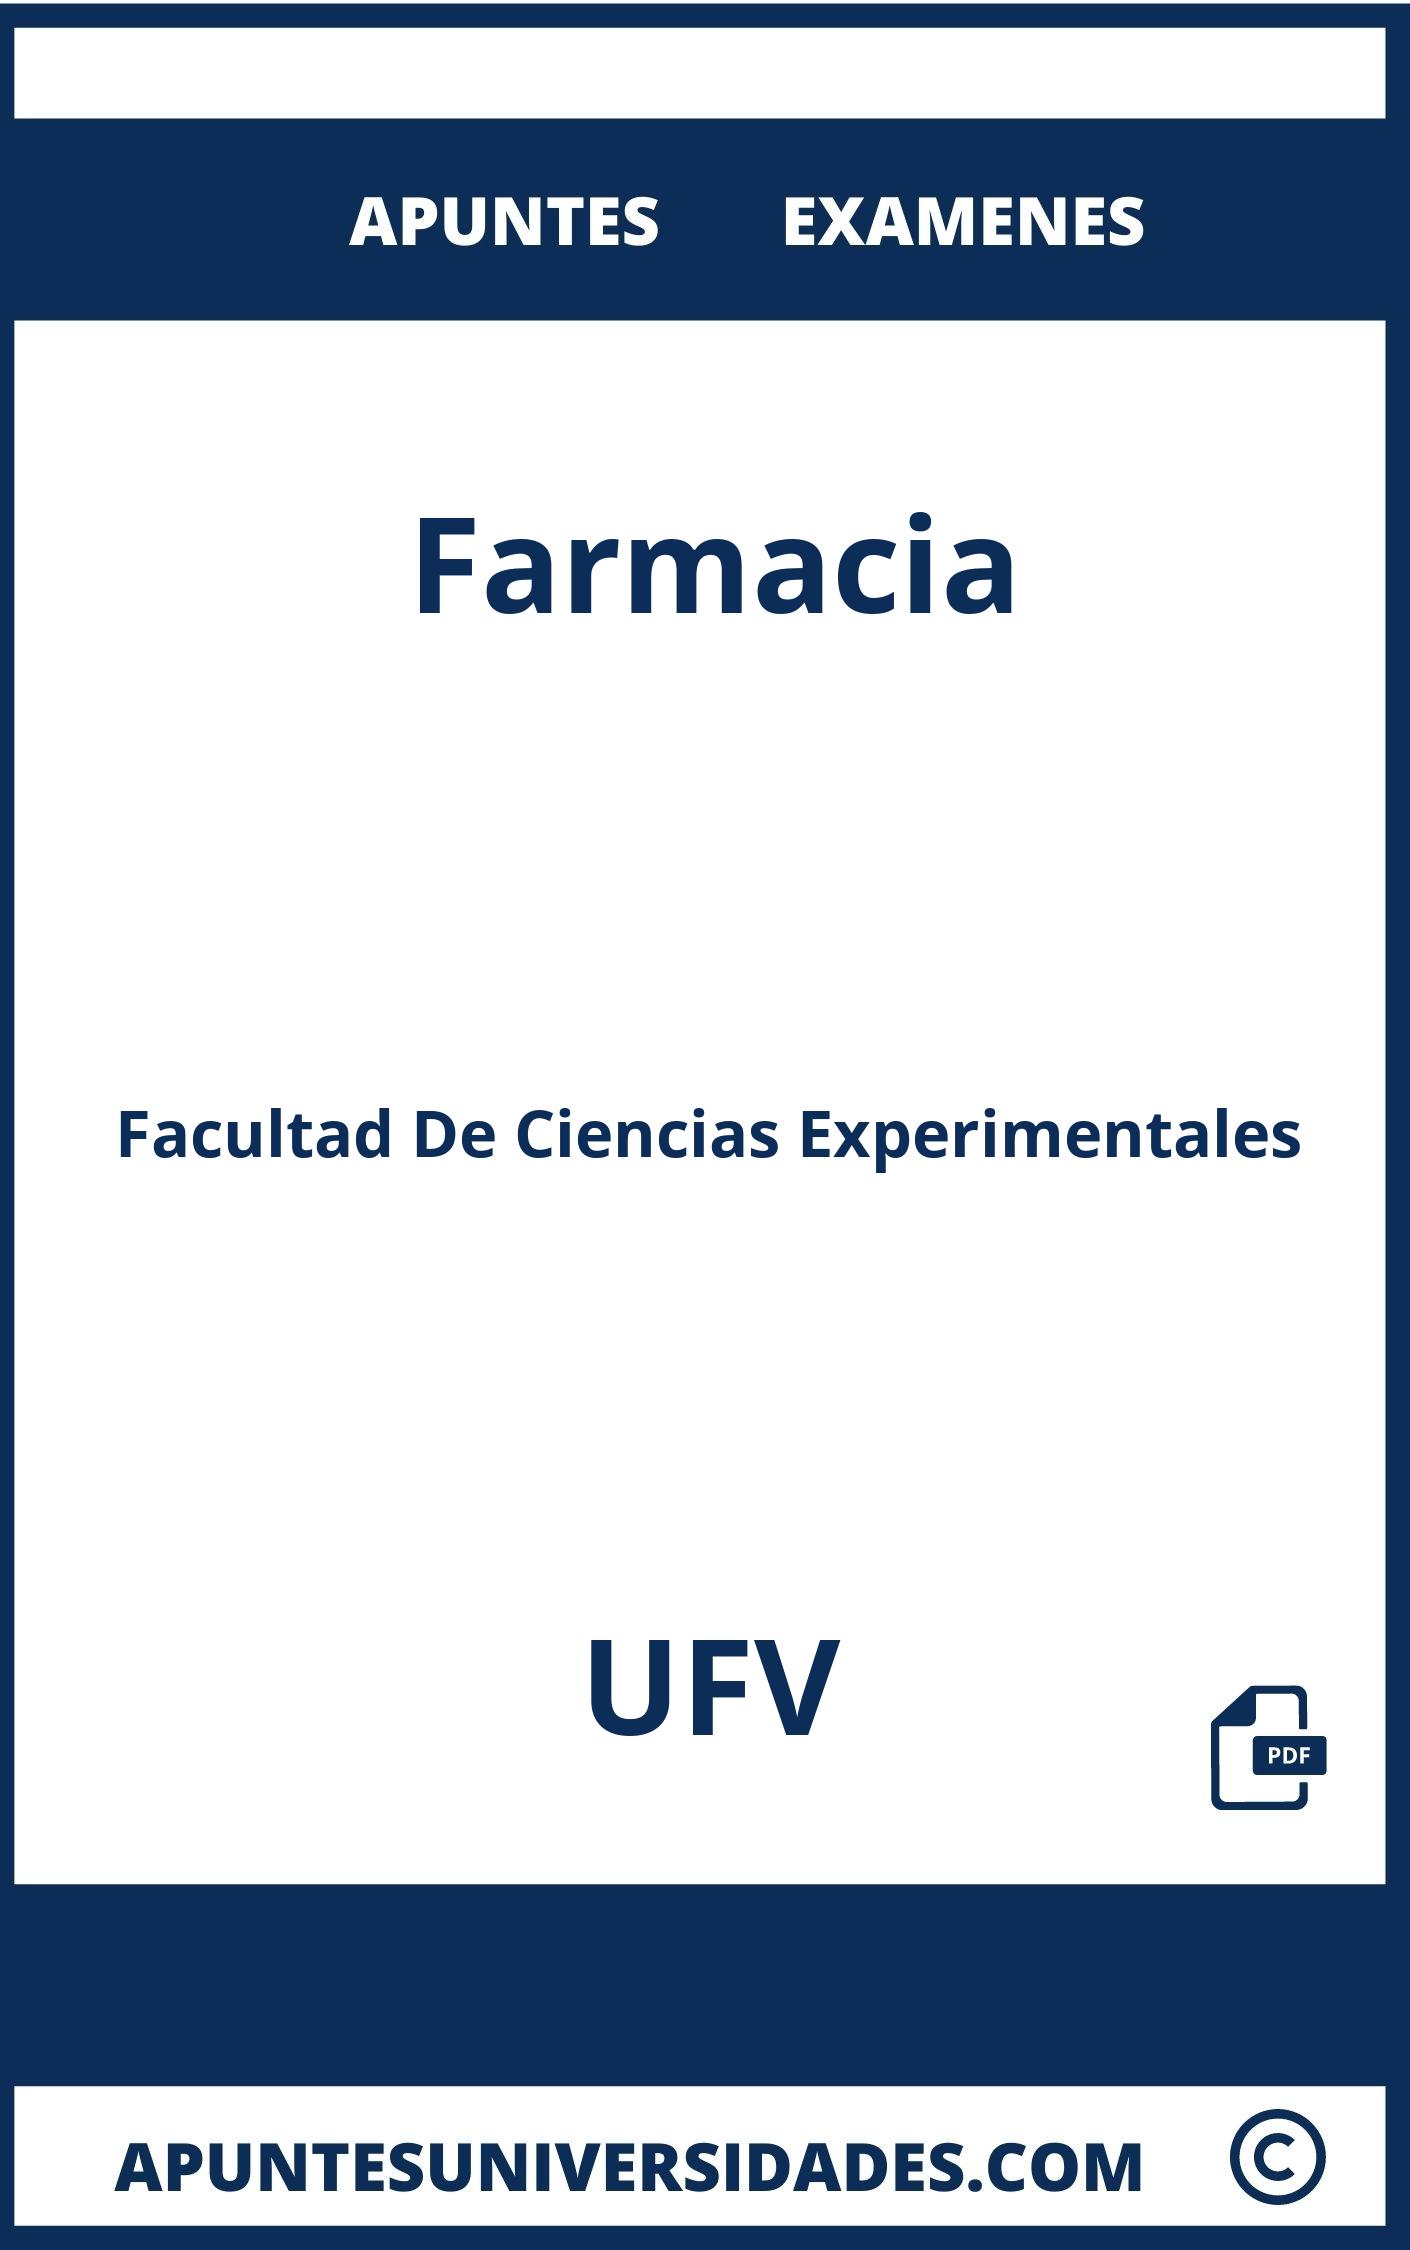 Apuntes Examenes Farmacia UFV